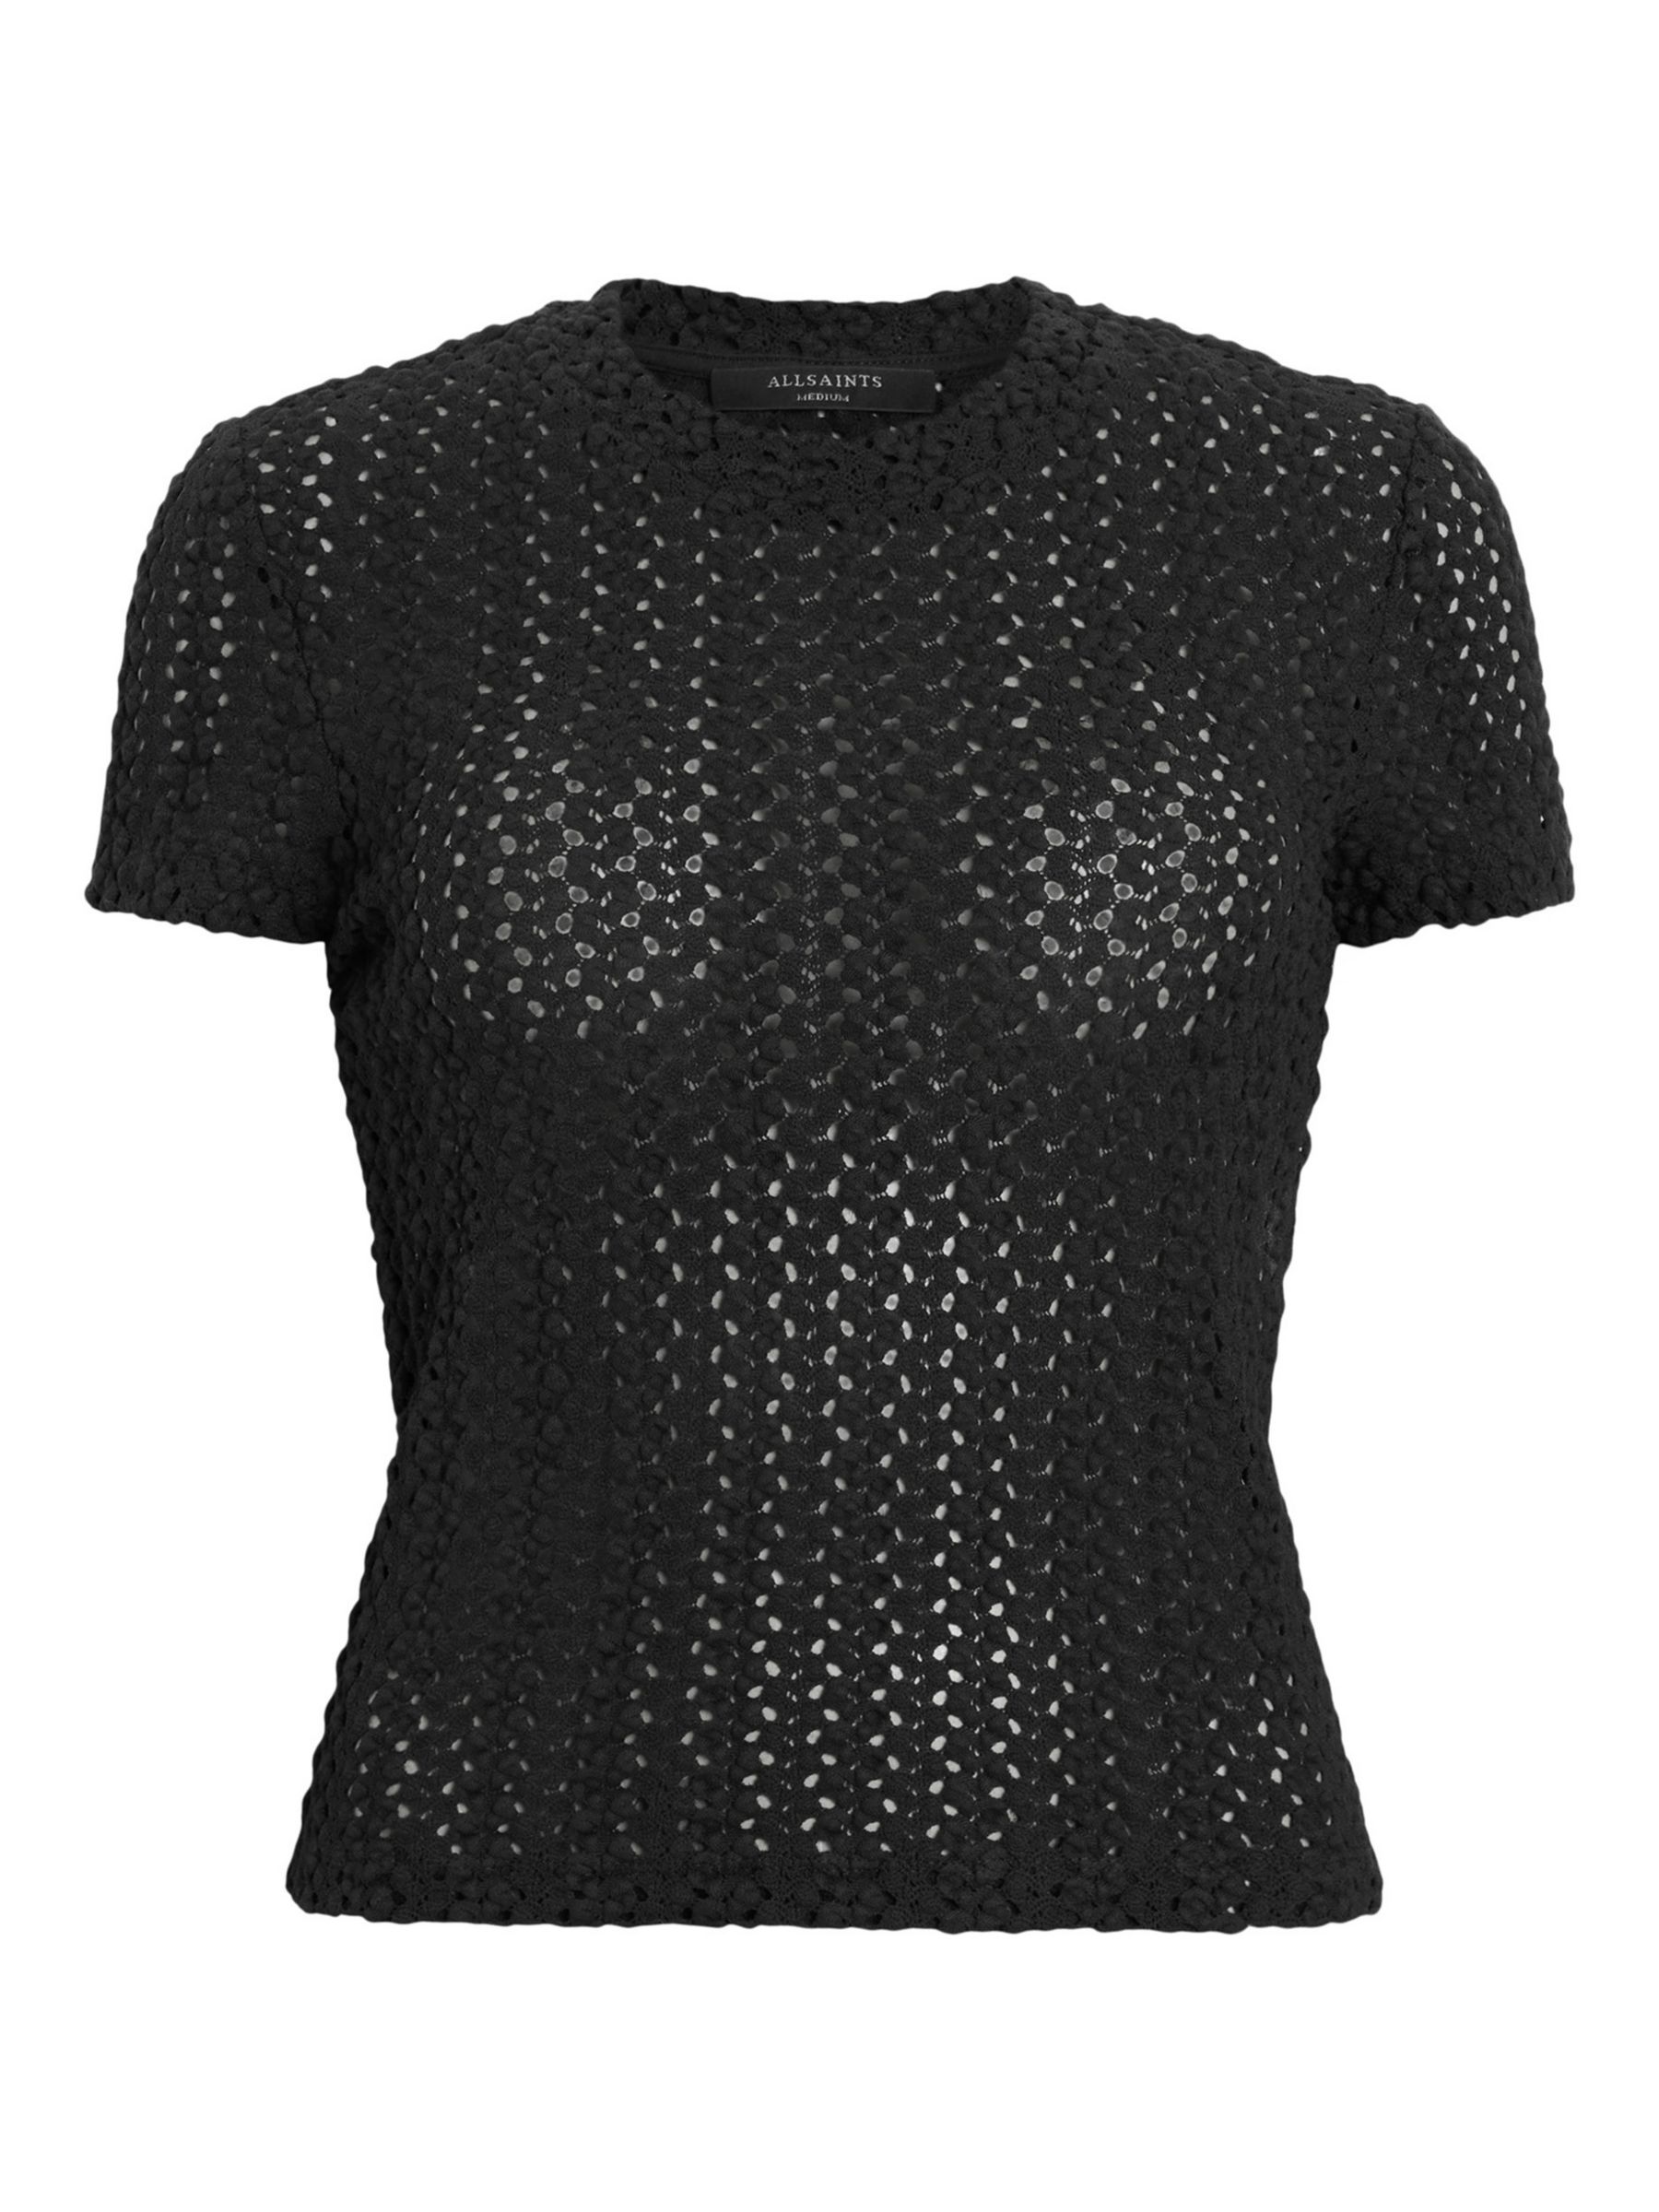 AllSaints Karma Stevie Crochet Style T-Shirt, Black, 10